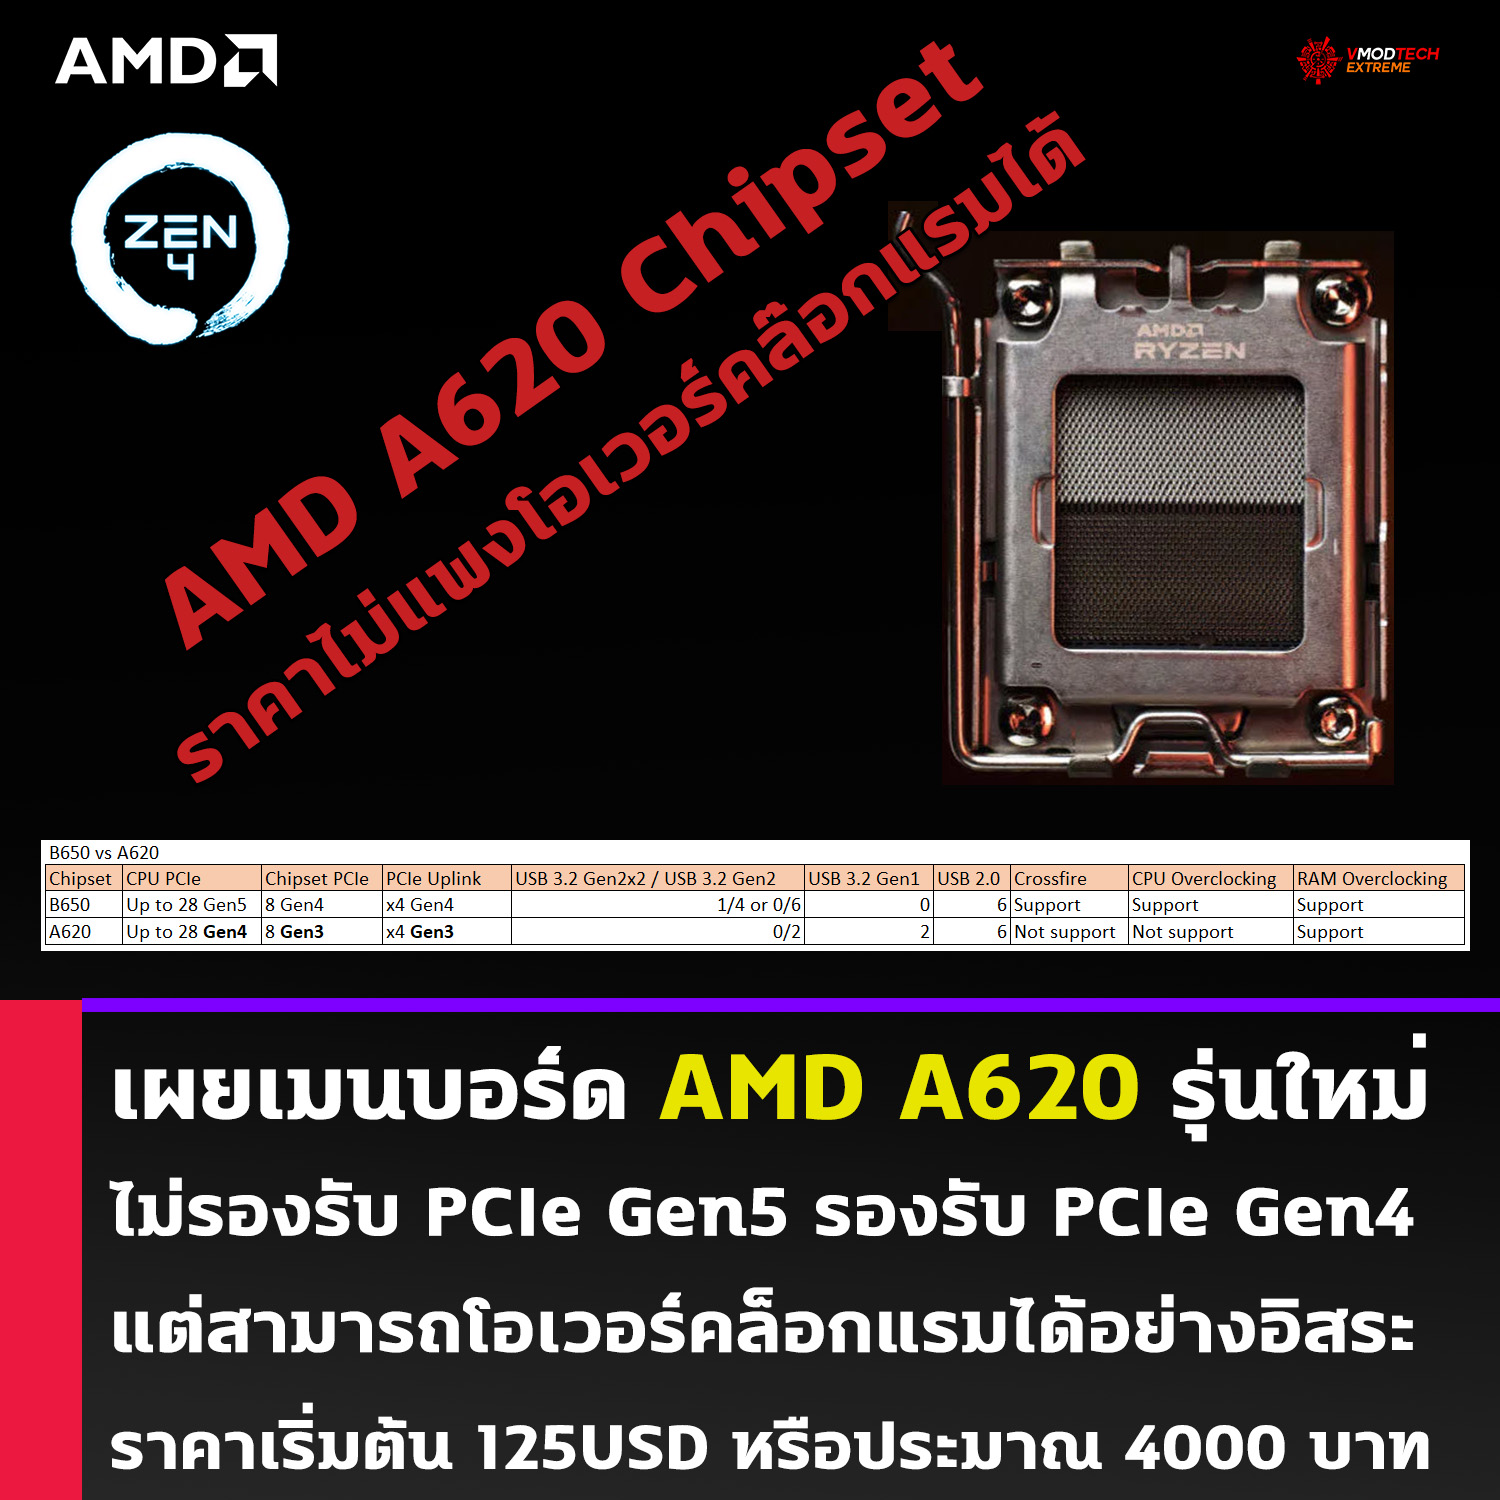 amd a620 เผยเมนบอร์ด AMD A620 รุ่นใหม่ล่าสุดไม่รองรับ PCIe Gen5 แต่สามารถโอเวอร์คล็อกแรมได้อย่างอิสระ 